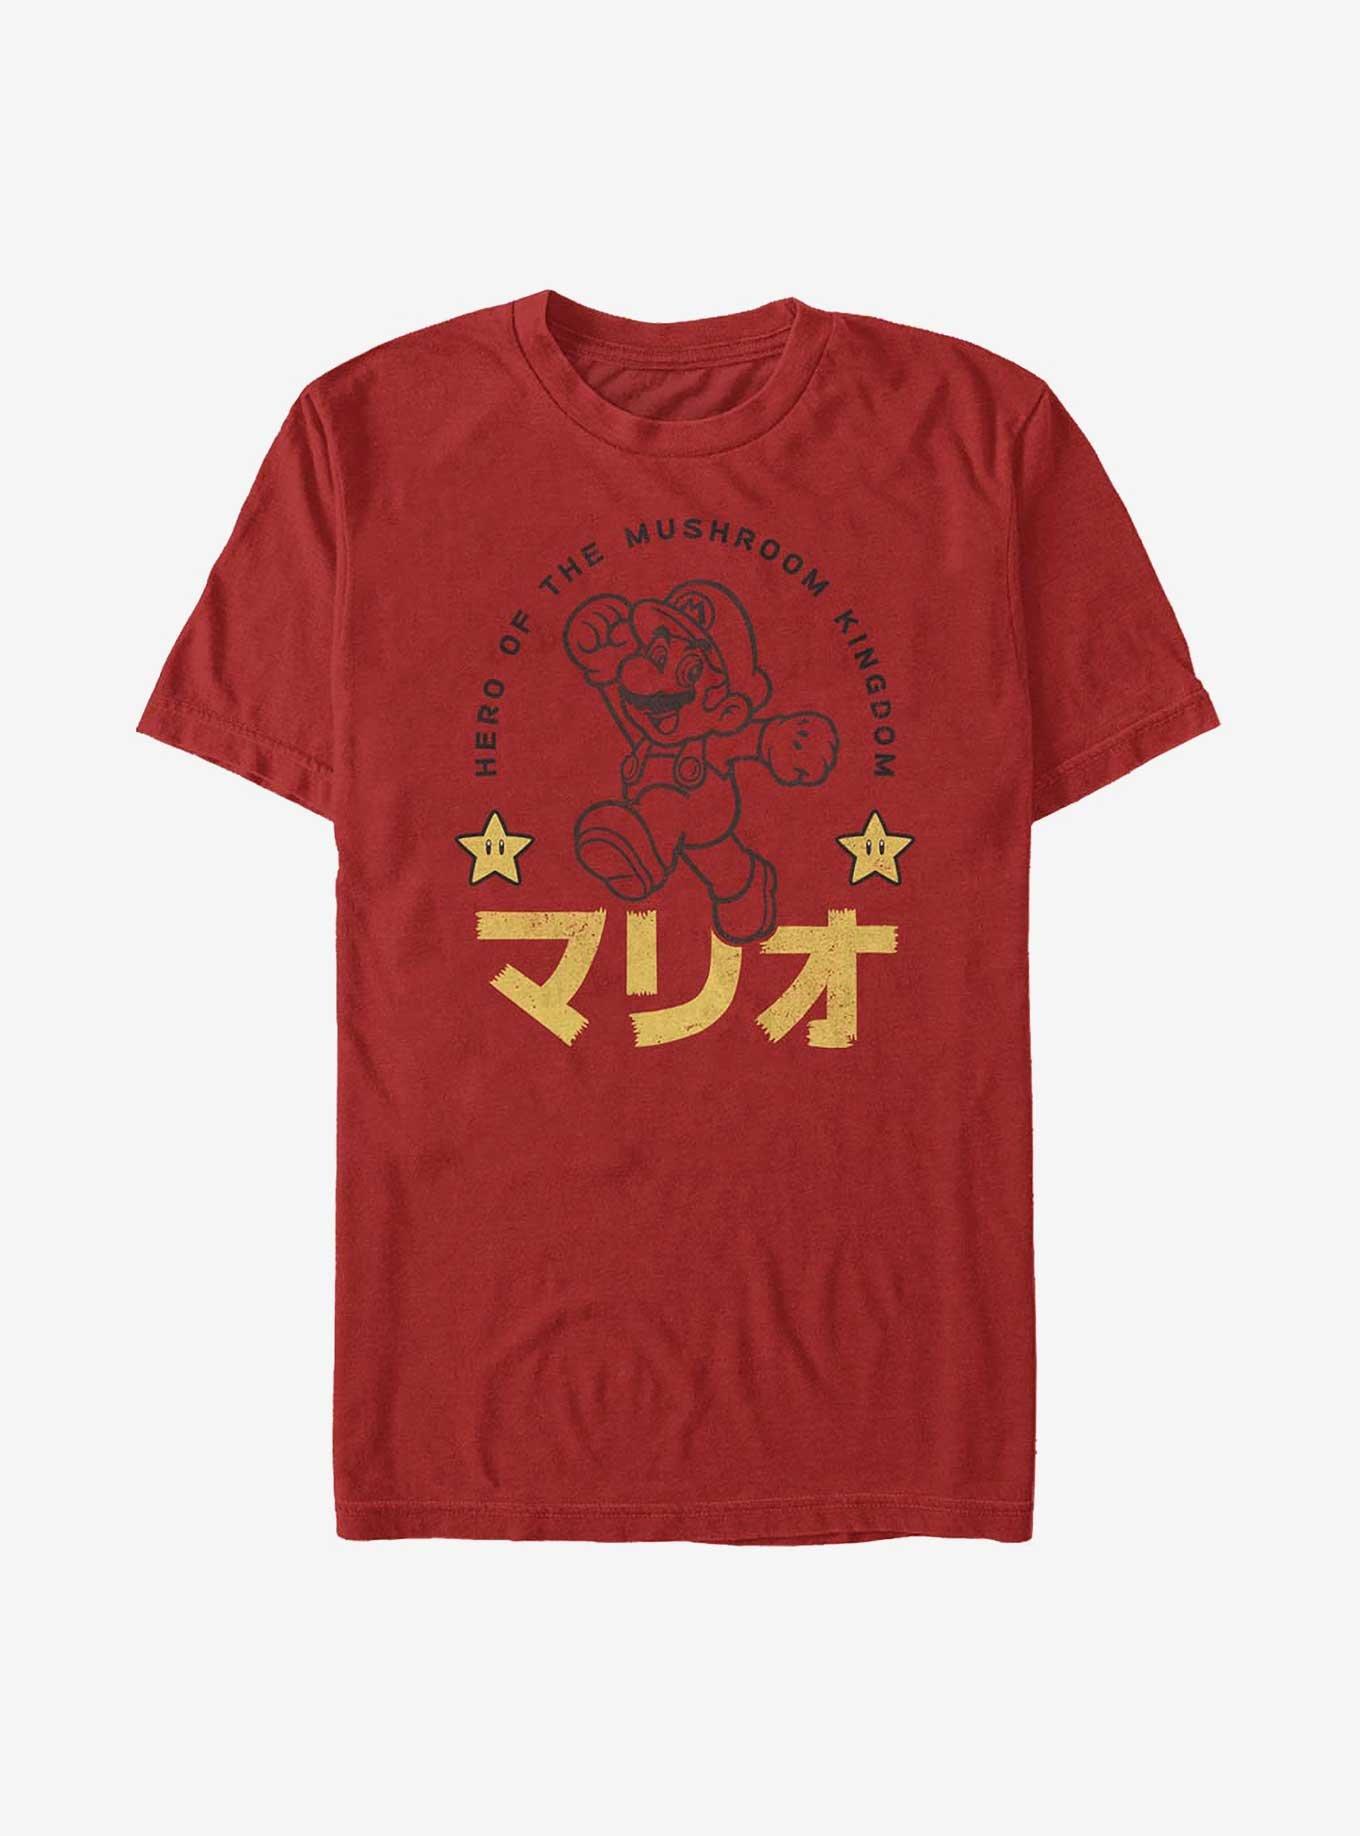 Nintendo Mario Mushroom Kingdom Hero T-Shirt